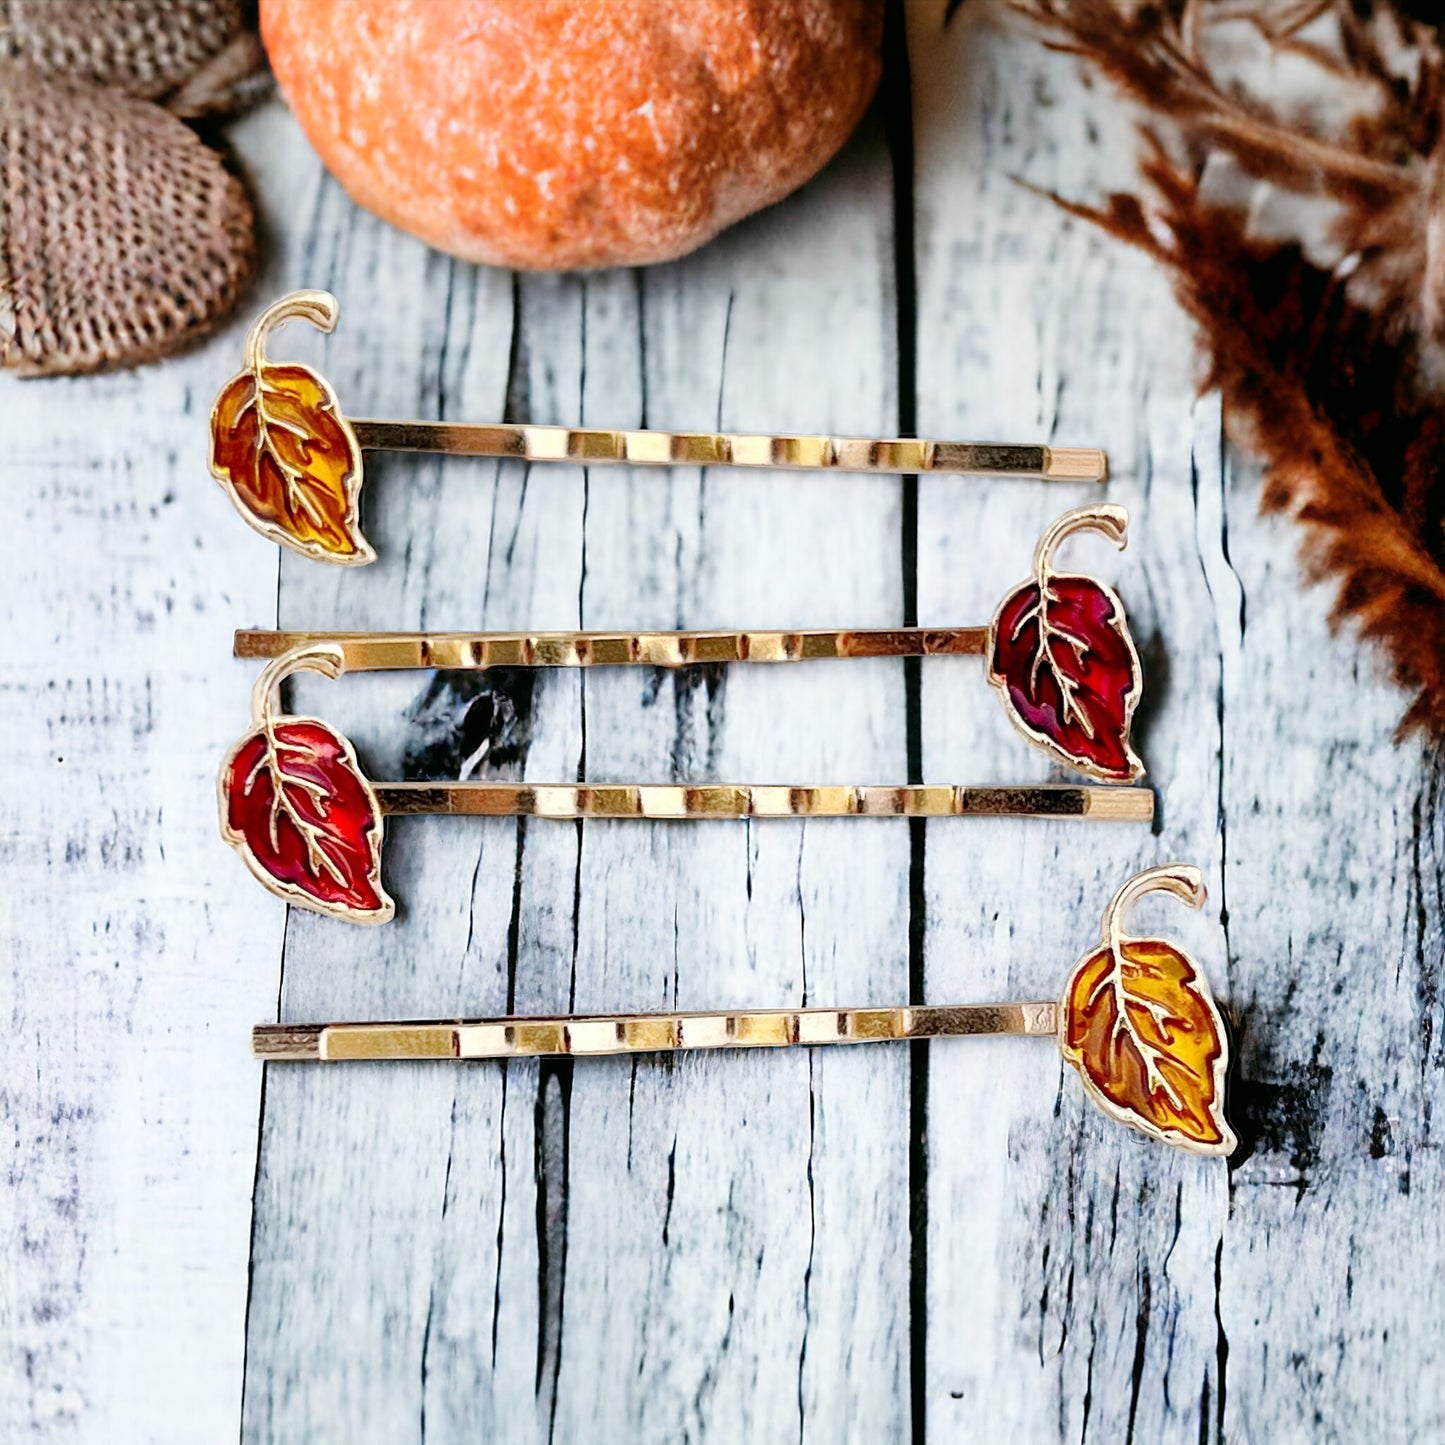 Red & Orange Enamel Leaf Hair Pins - Colorful & Stylish Accessories